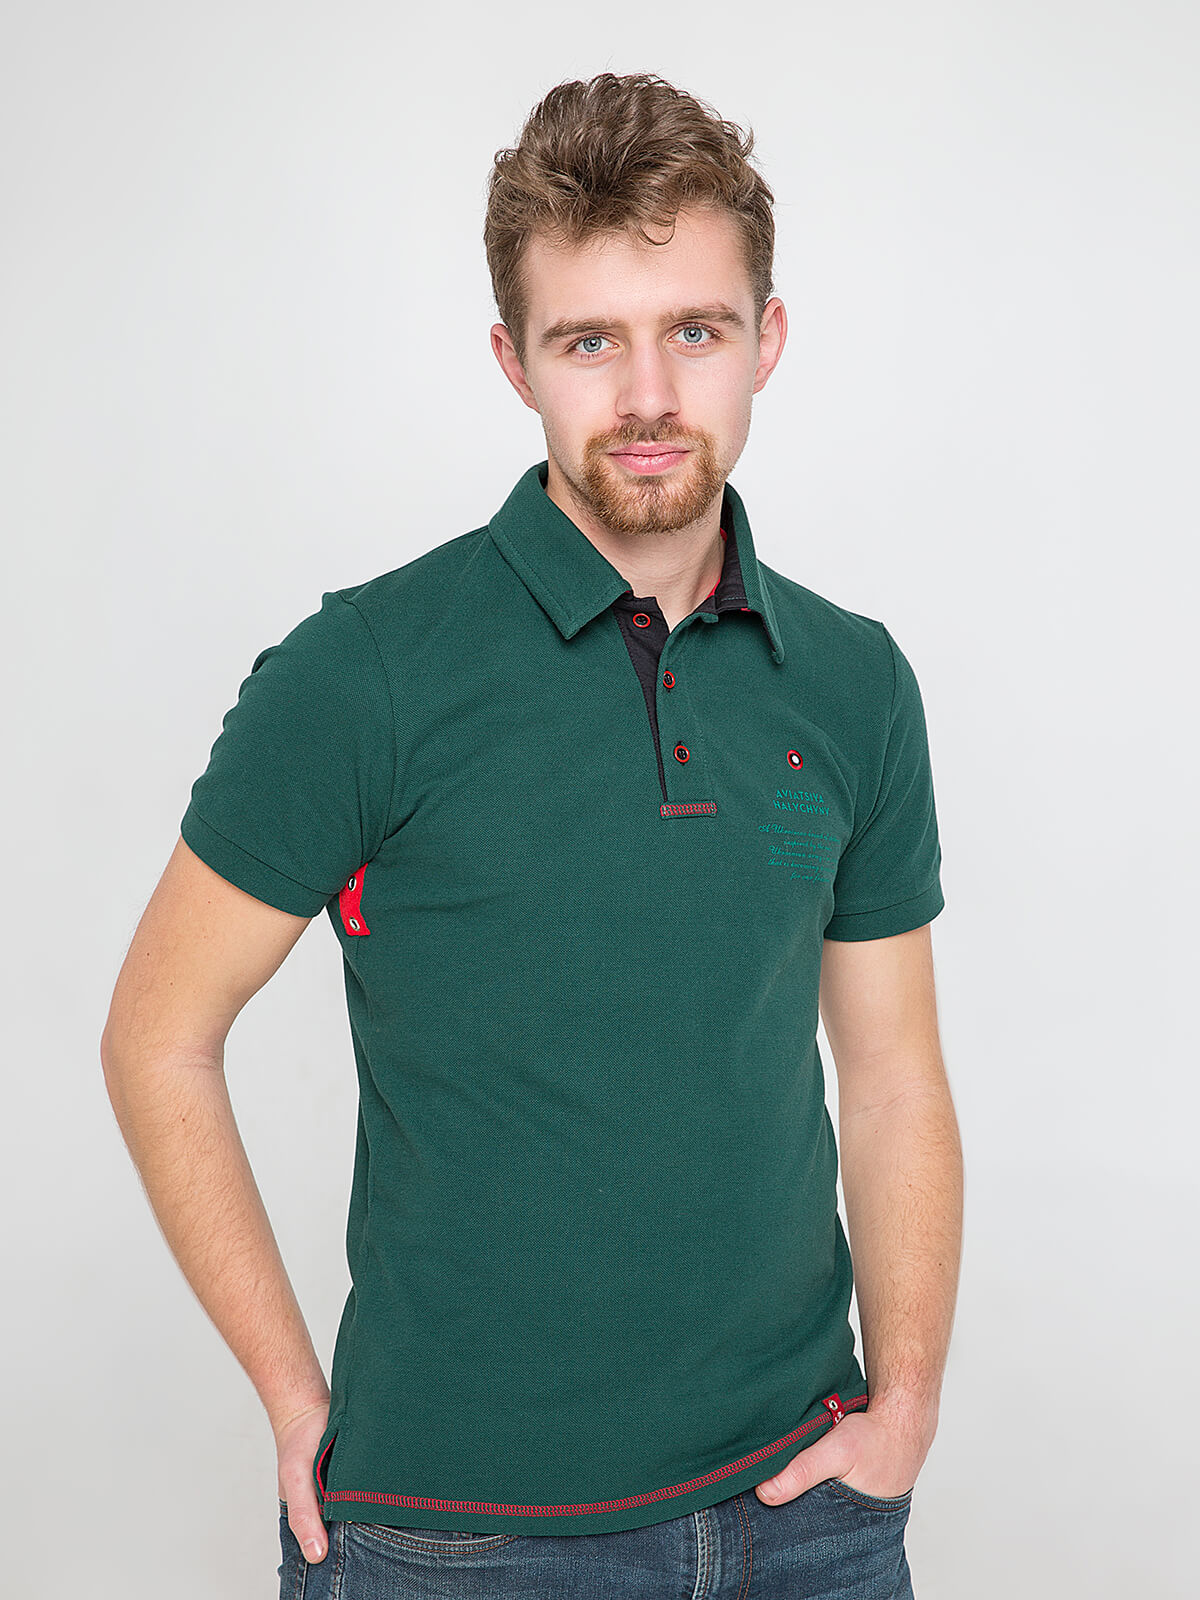 Men's Polo Shirt Wings. Color dark green. Unisex polo (men’s sizes).